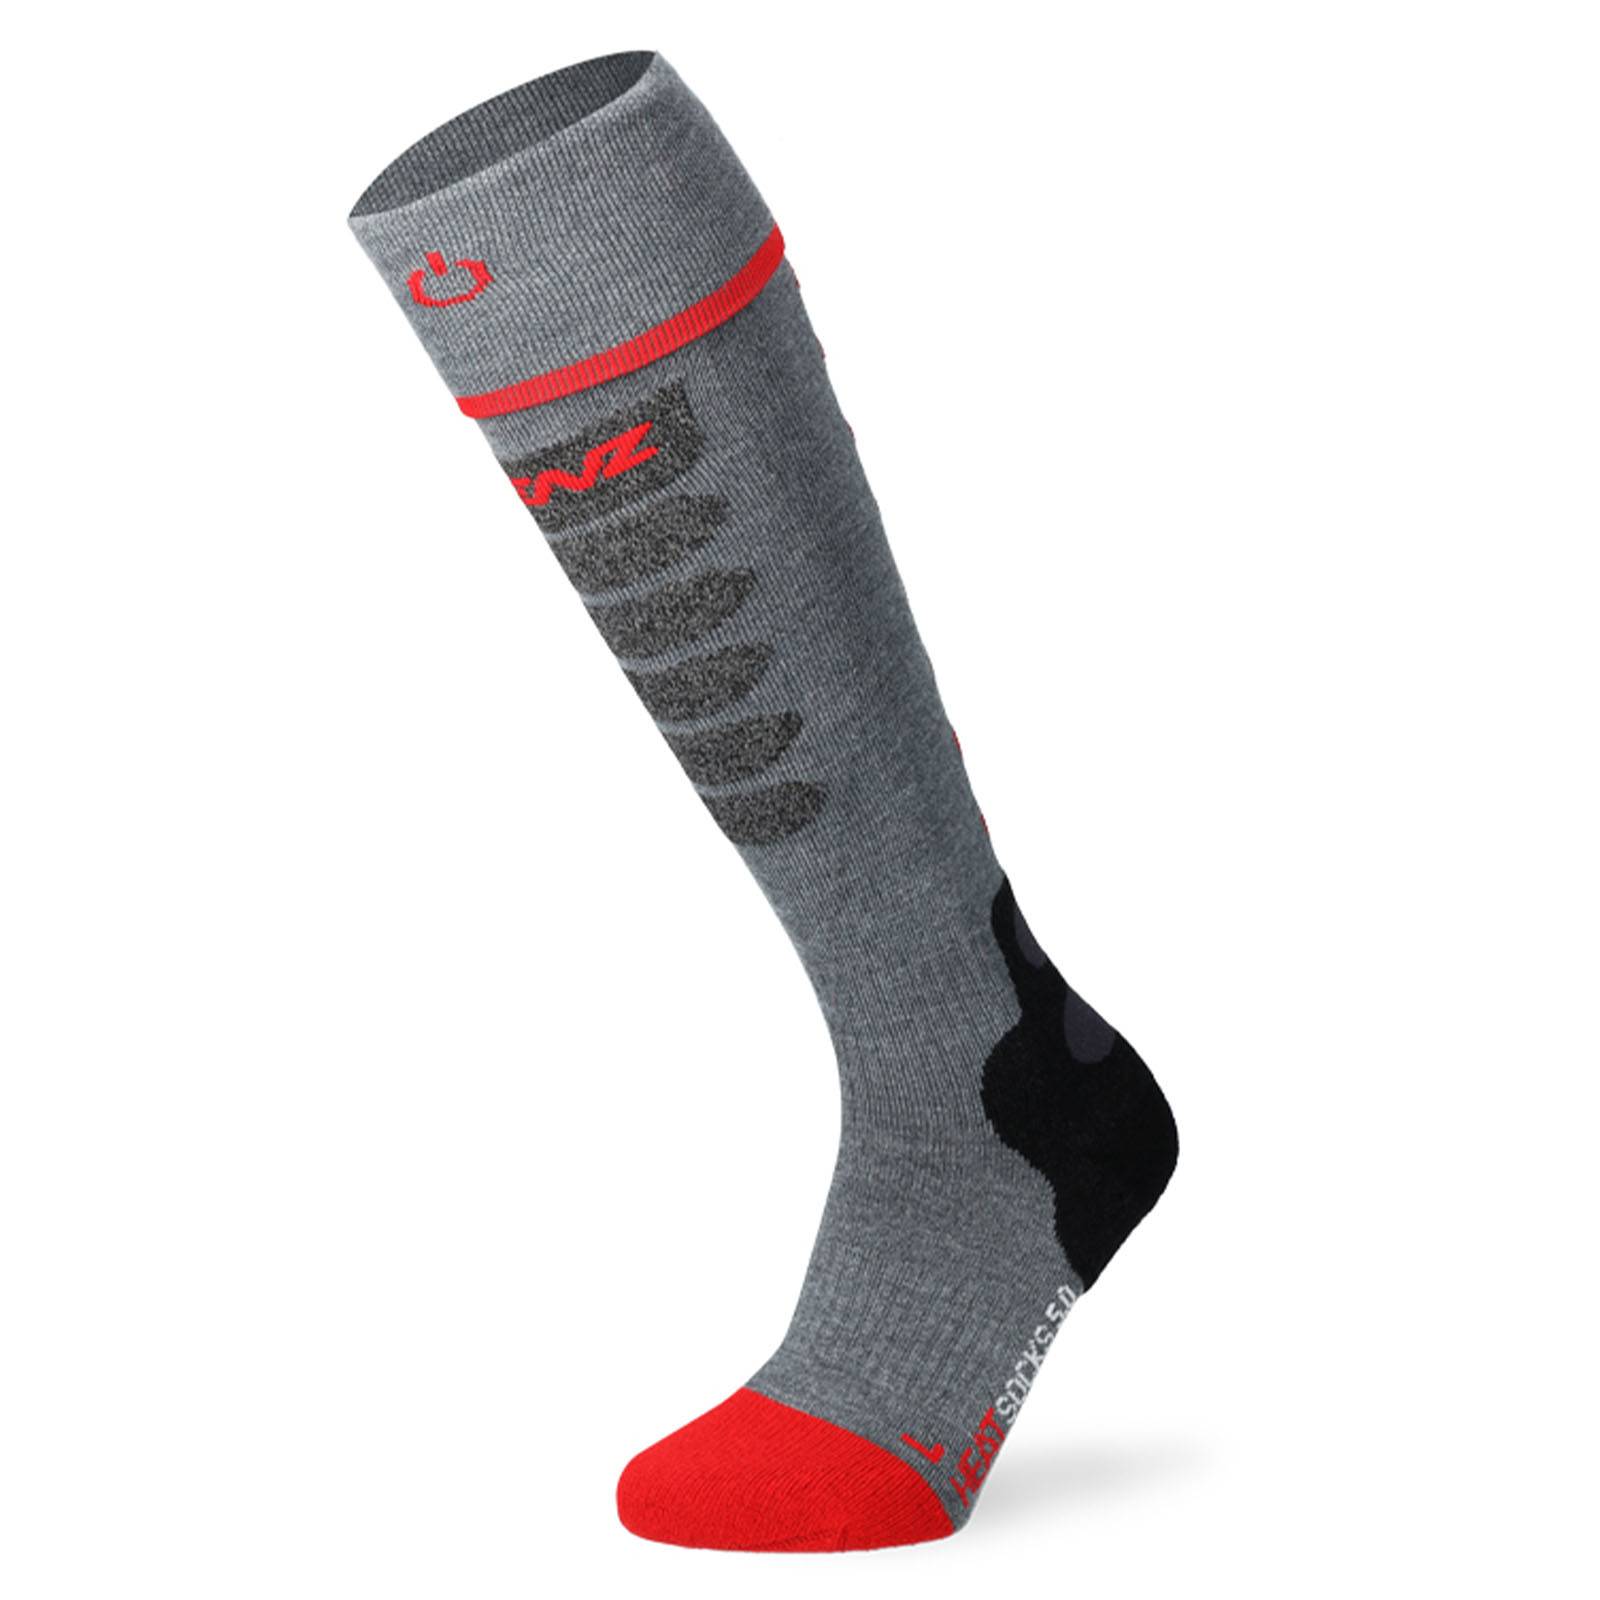 LENZ heat sock 5.1 toe cap slim fit beheizbare Socken